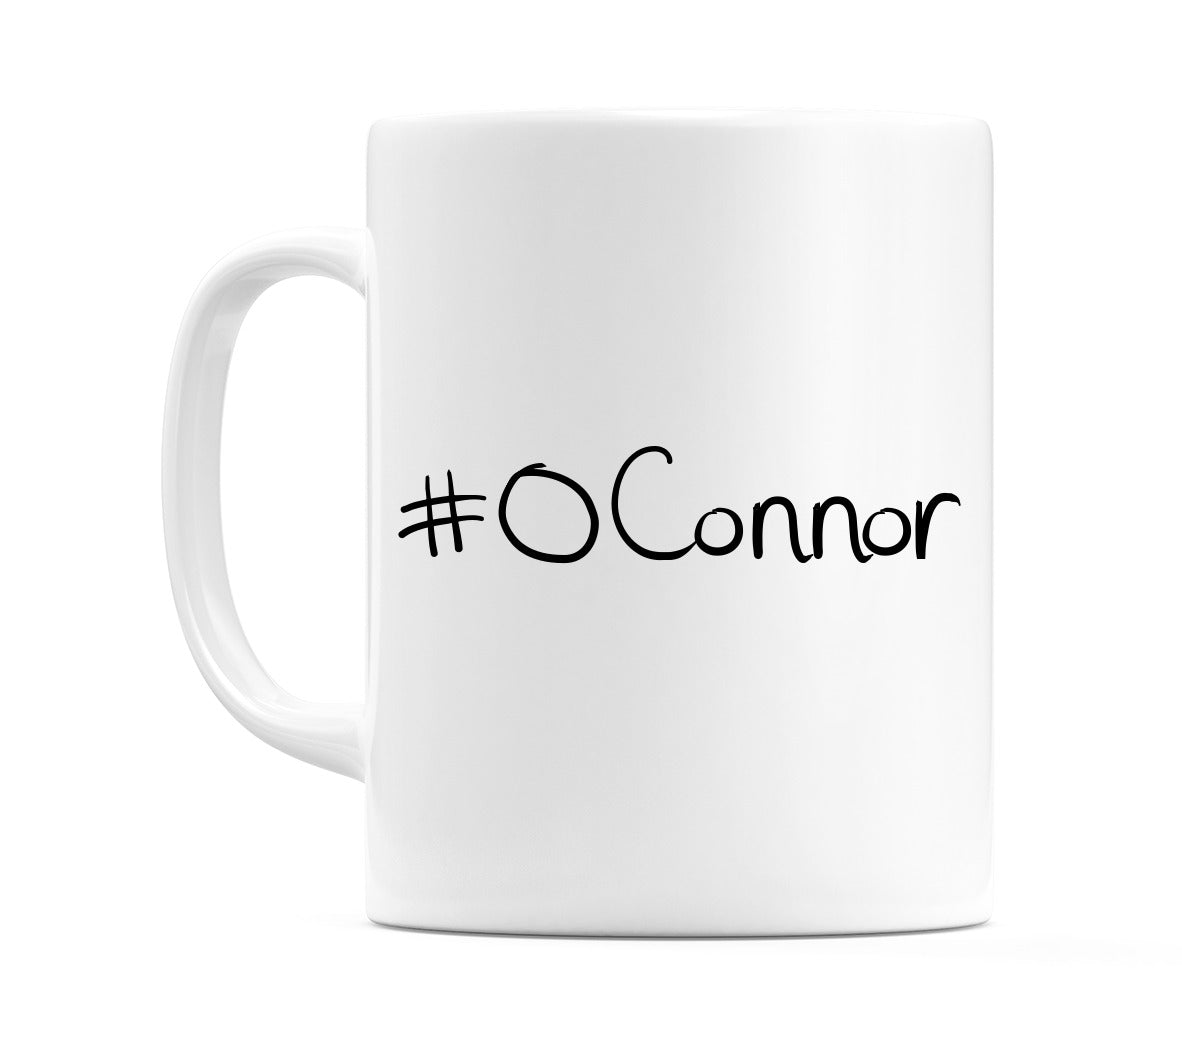 #OConnor Mug